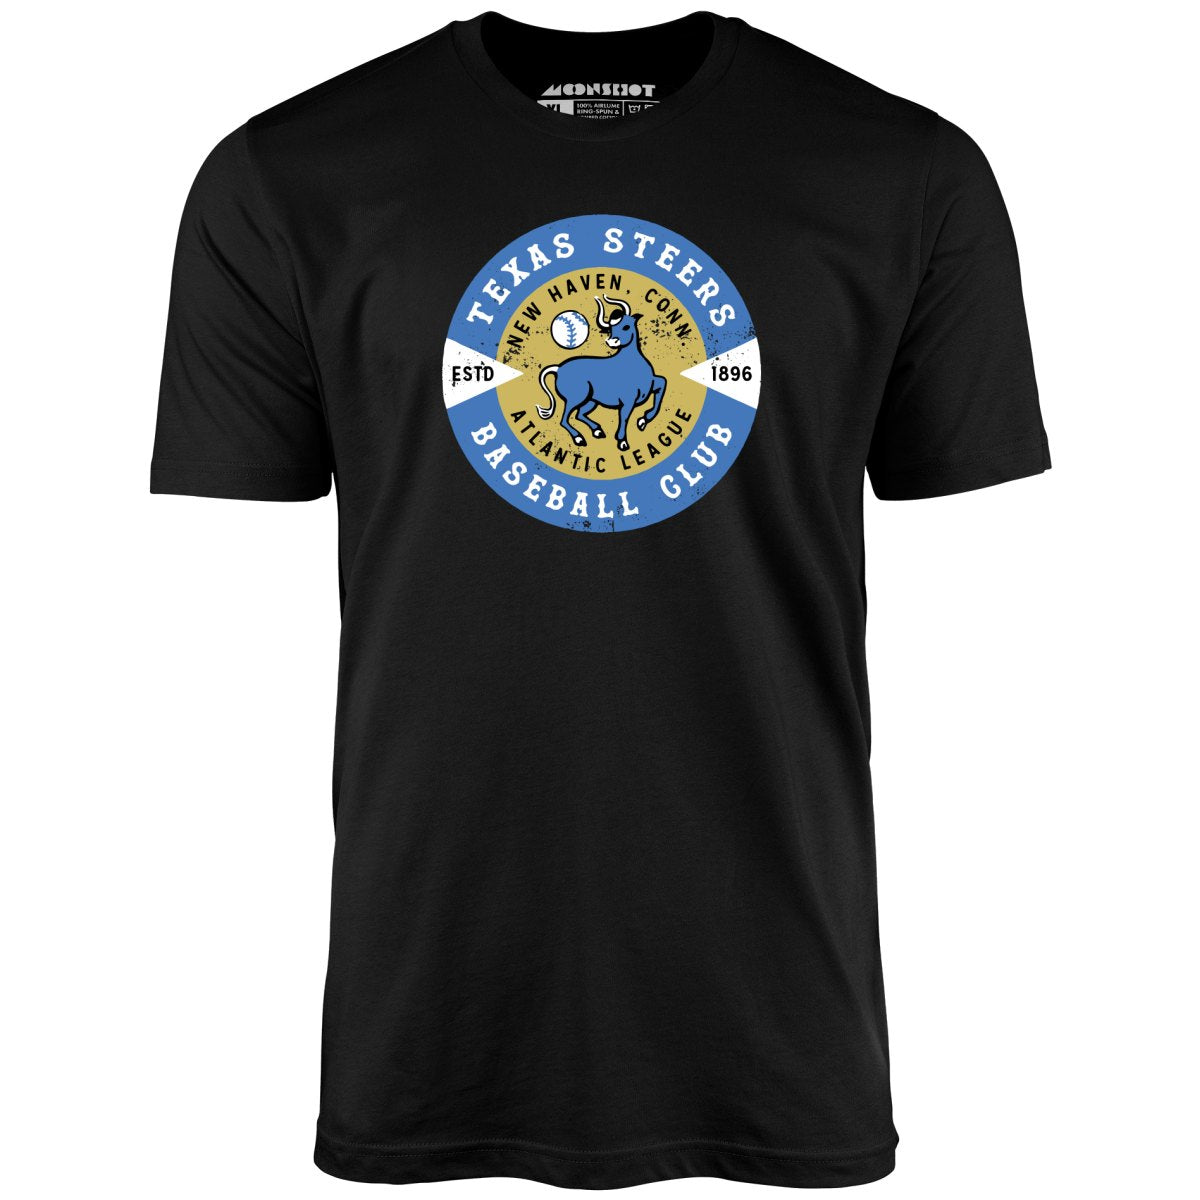 New Haven Texas Steers - Connecticut - Vintage Defunct Baseball Teams - Unisex T-Shirt